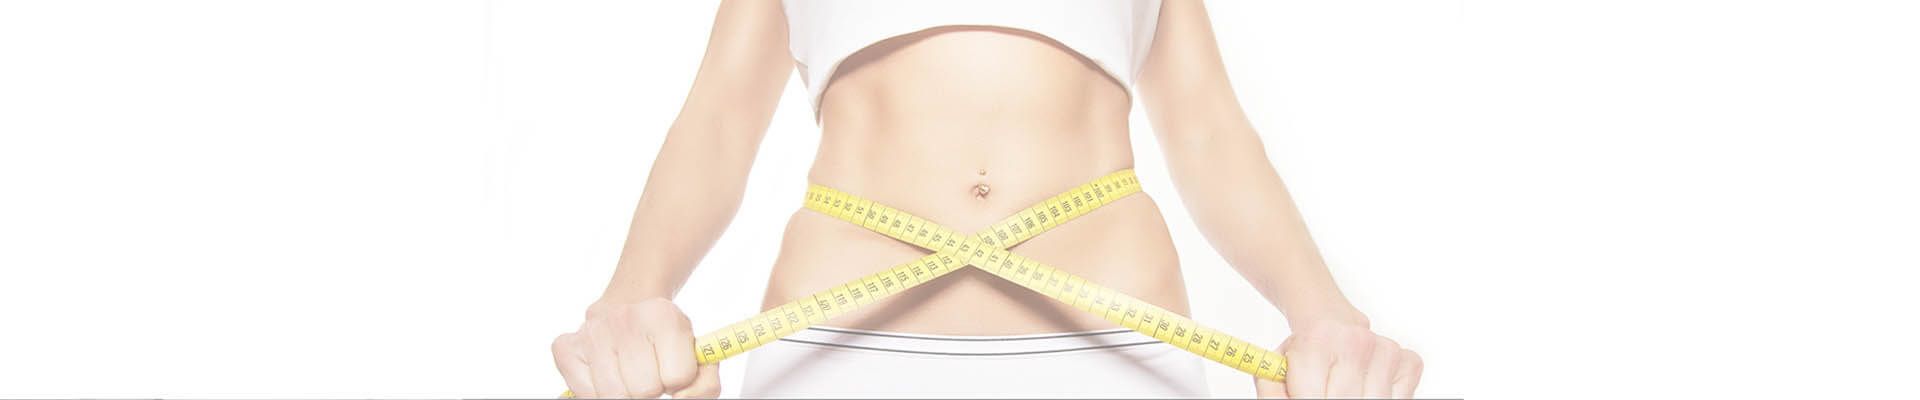 ONLINE Female FAT LOSS Header